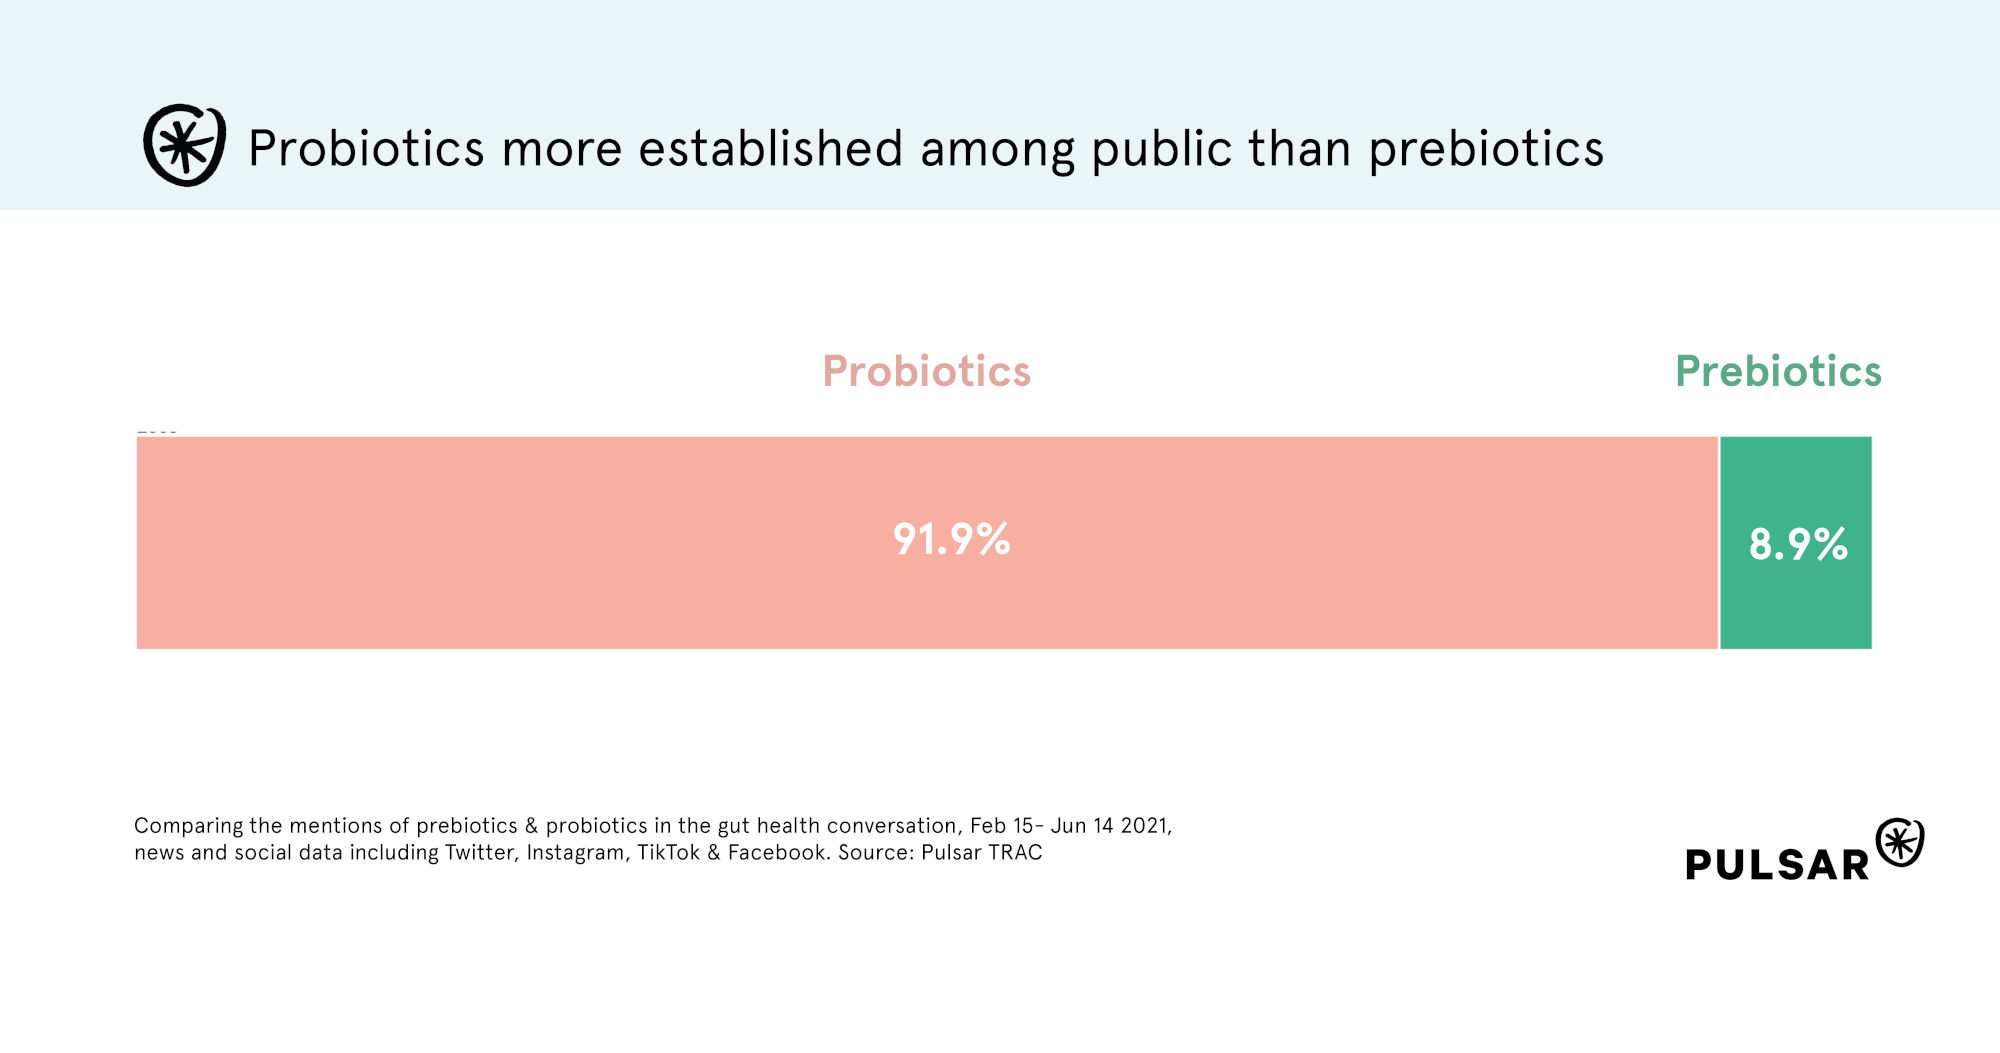 Probiotic and prebiotic volumes